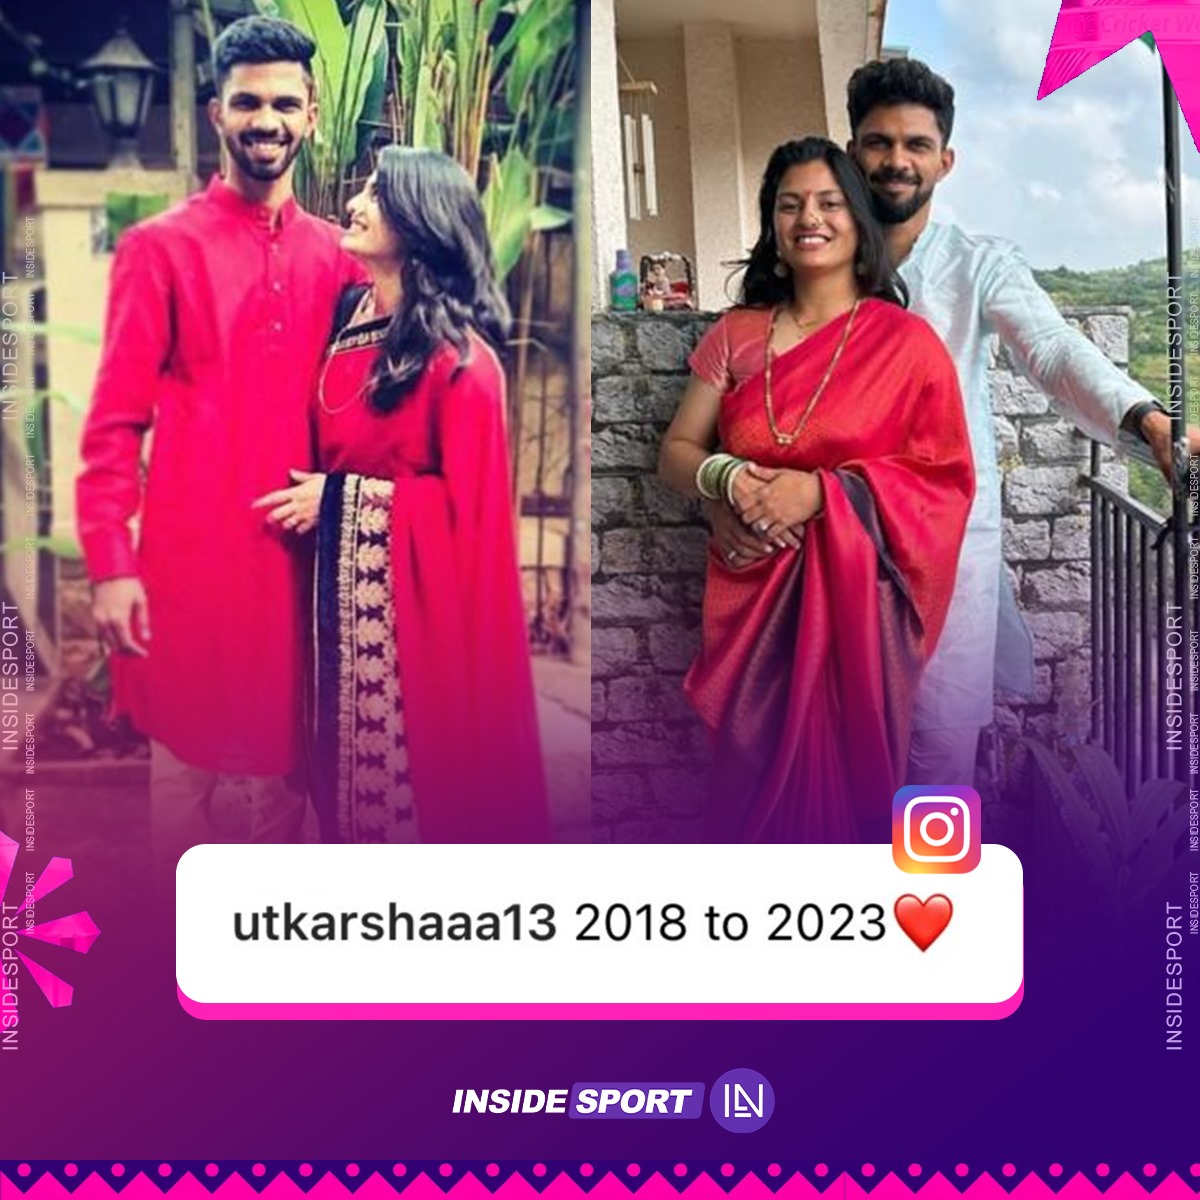 Ruturaj Gaikwad & Utkarsha Pawar completes 5️⃣ years of togetherness 💓

#RuturajGaikwad #UtkarshaPawar #CricketTwitter